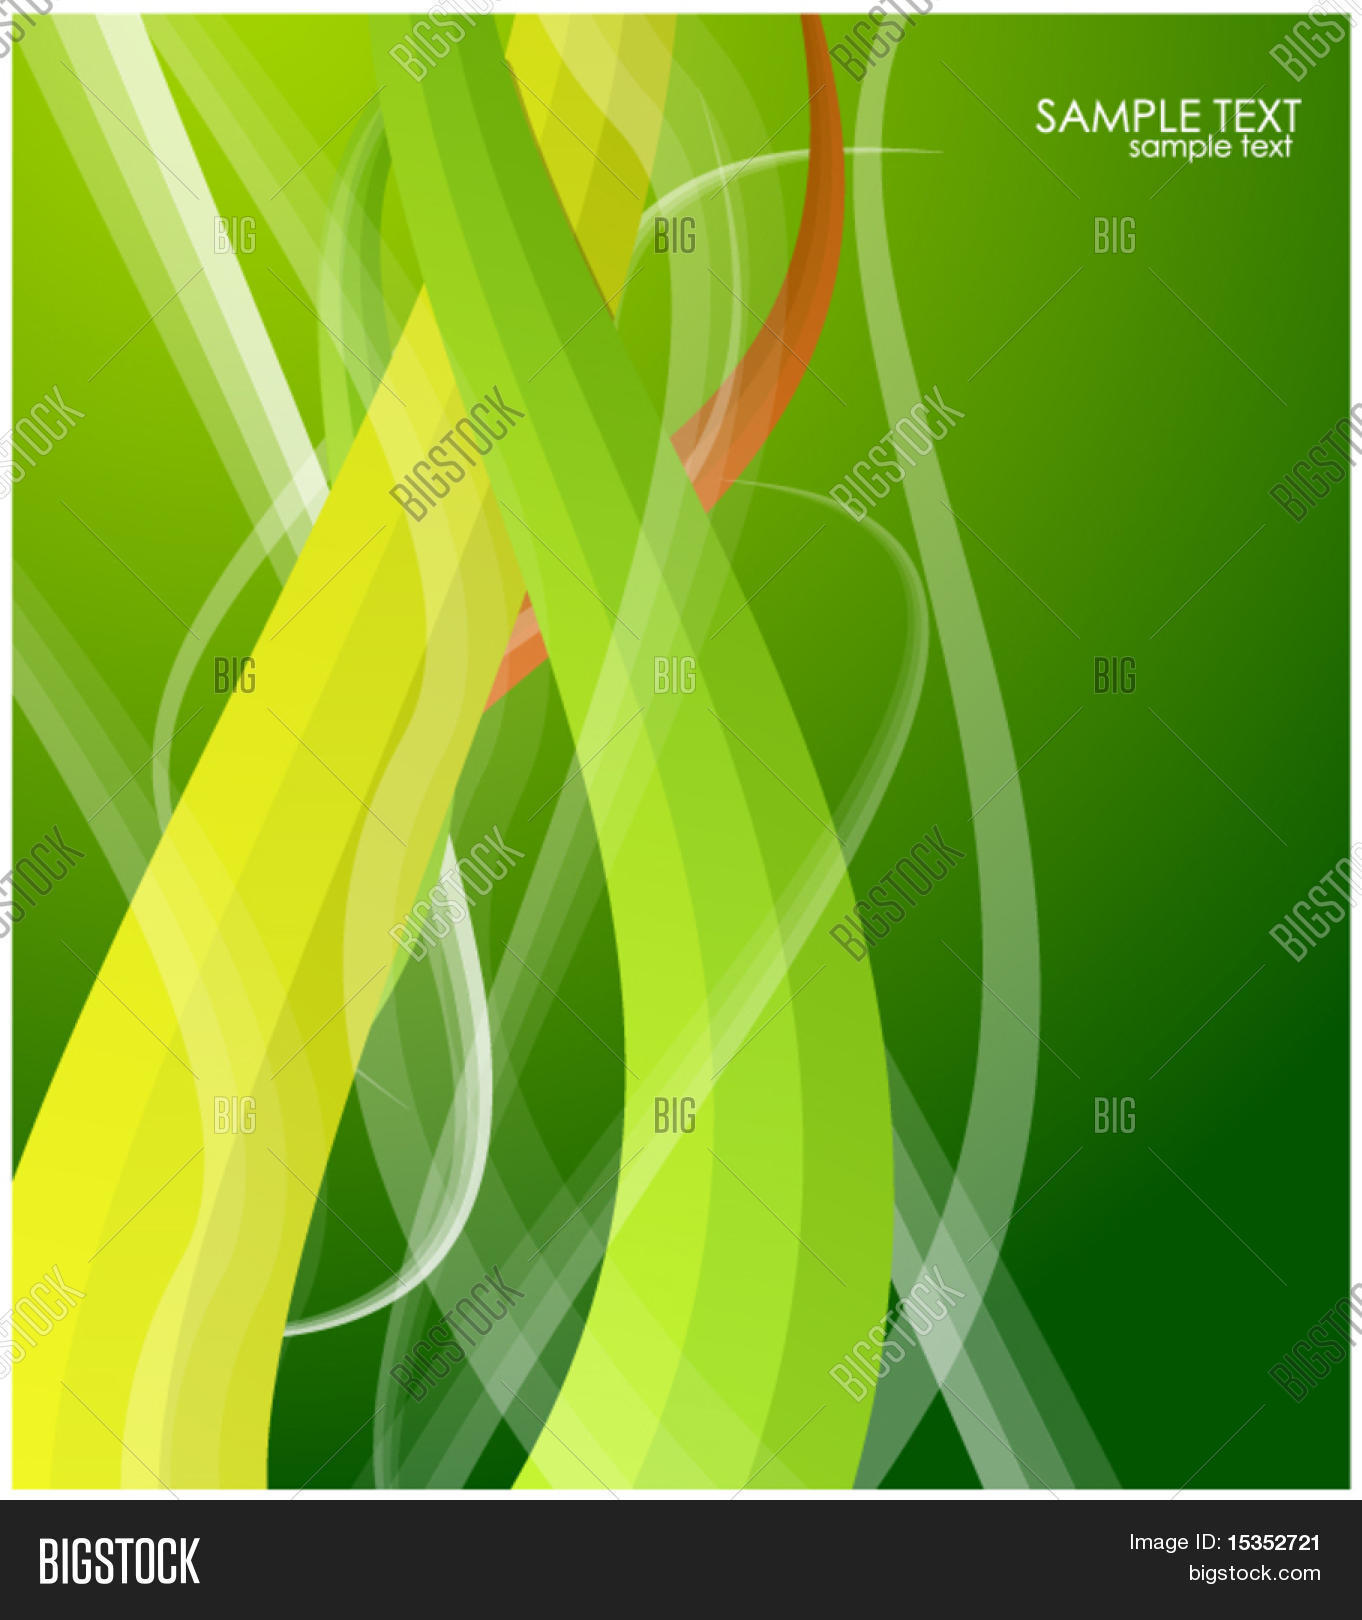 Green Deep Organic Background Vector & Photo | Bigstock